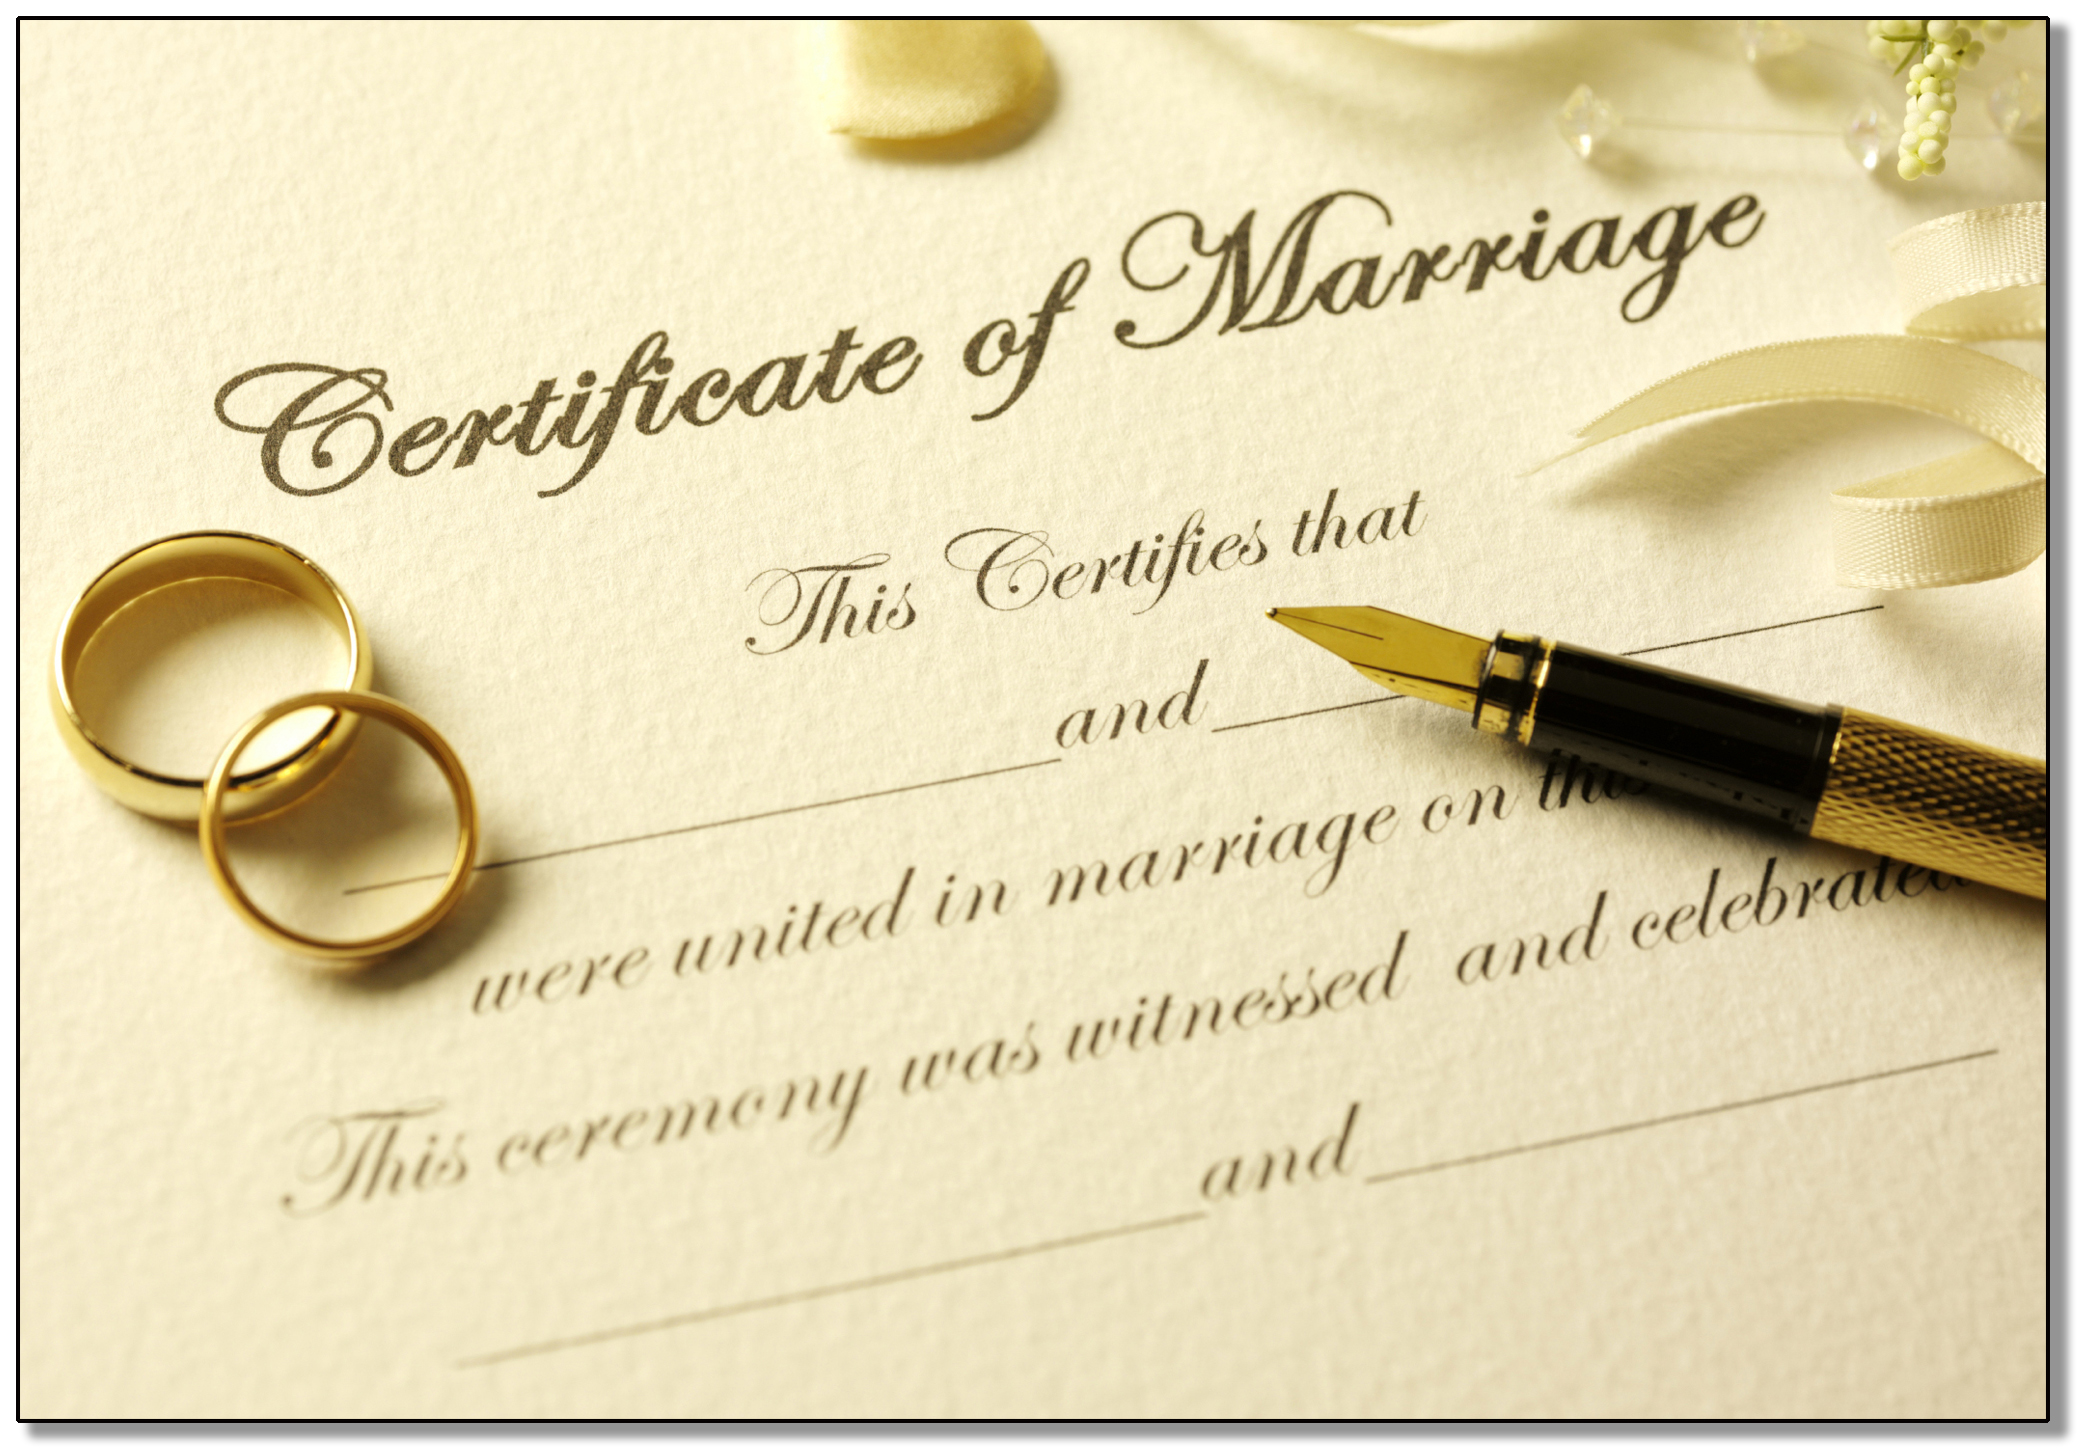 MarriageCertificateWeb.jpg